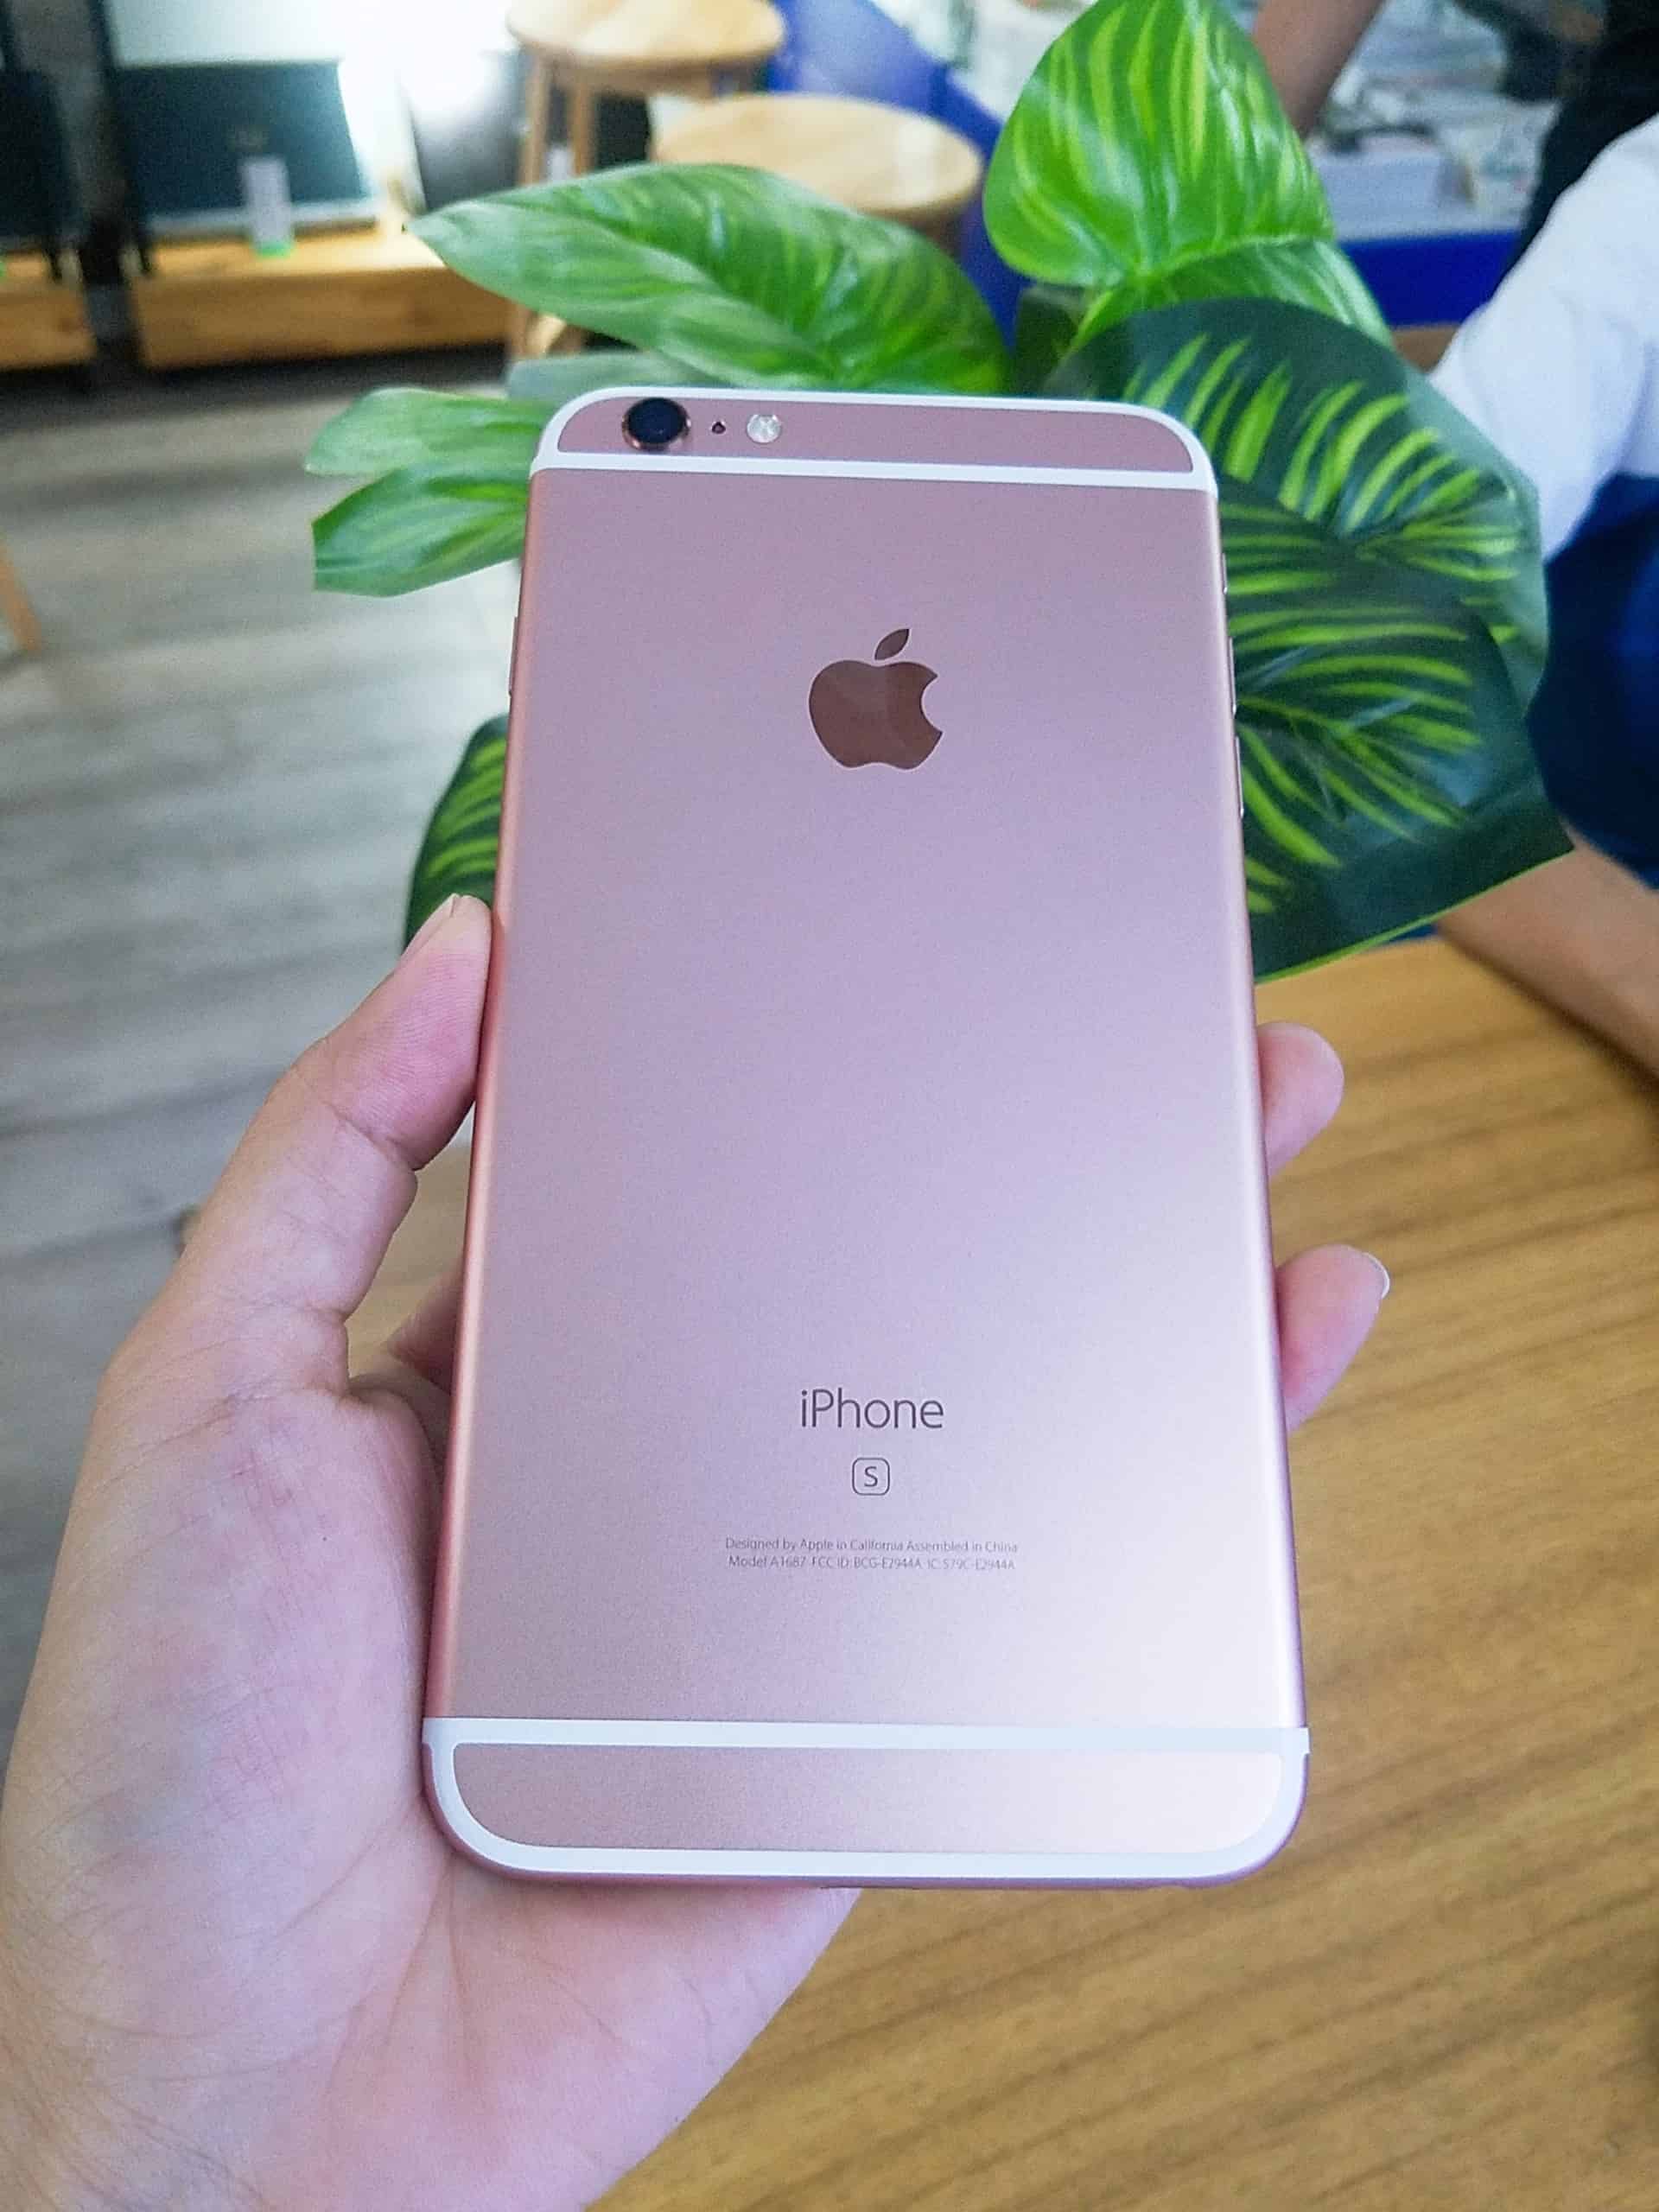 Thu mua iPhone Cũ Giá Cao tại TPHCM | ProCARE24h.vn